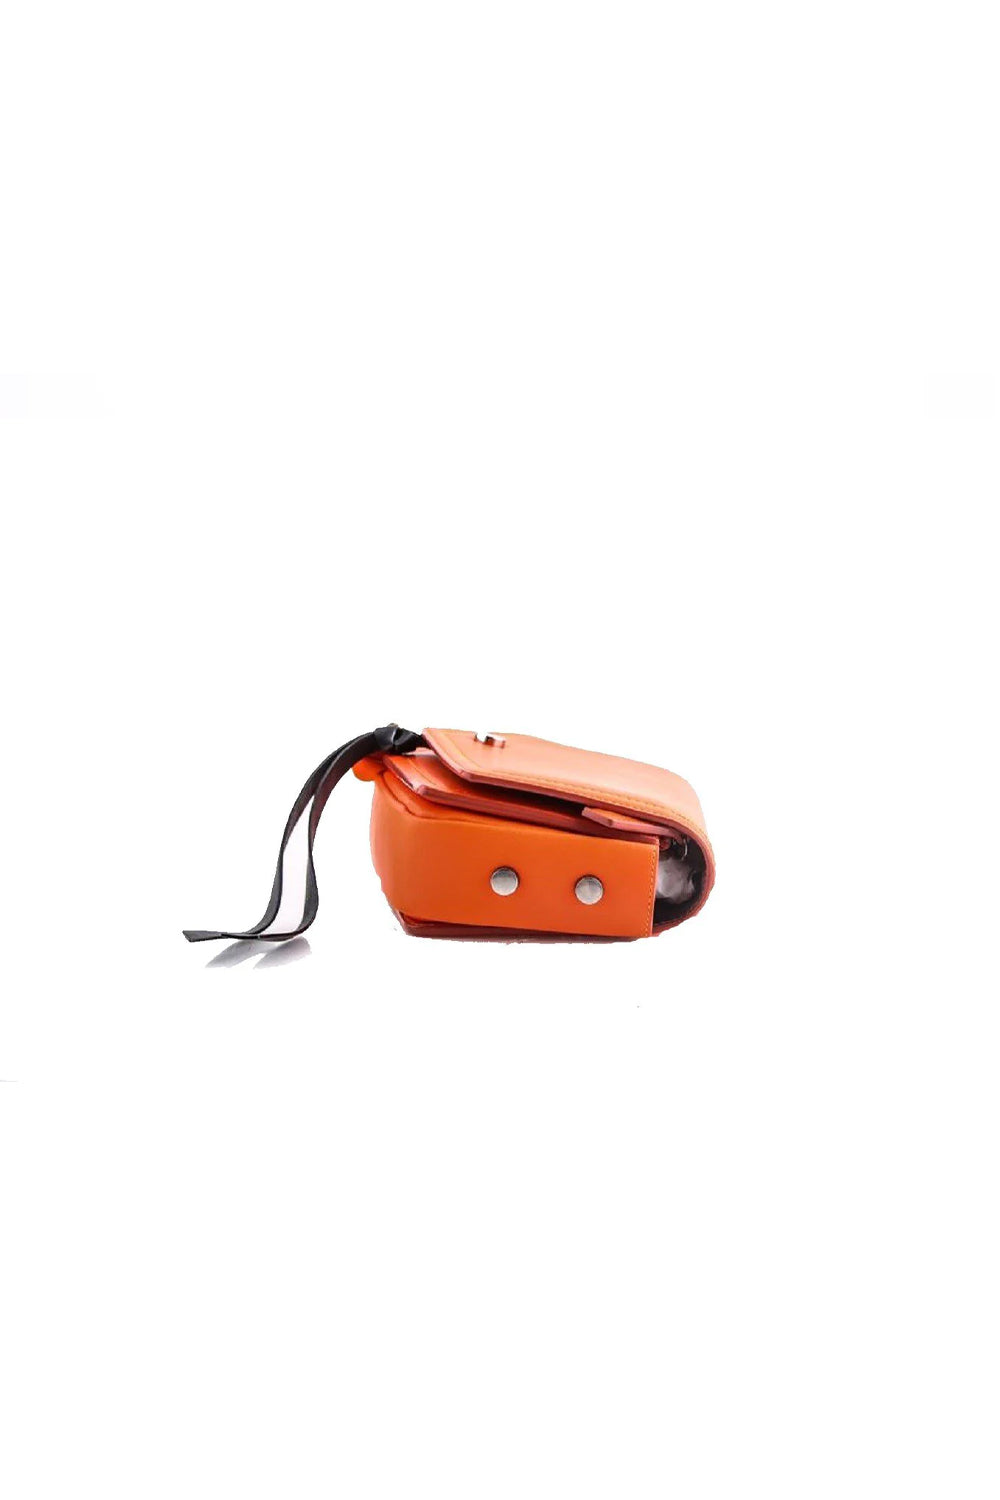 Jimmy Choo Arrow Orange Nappa Leather Crossbody Bag